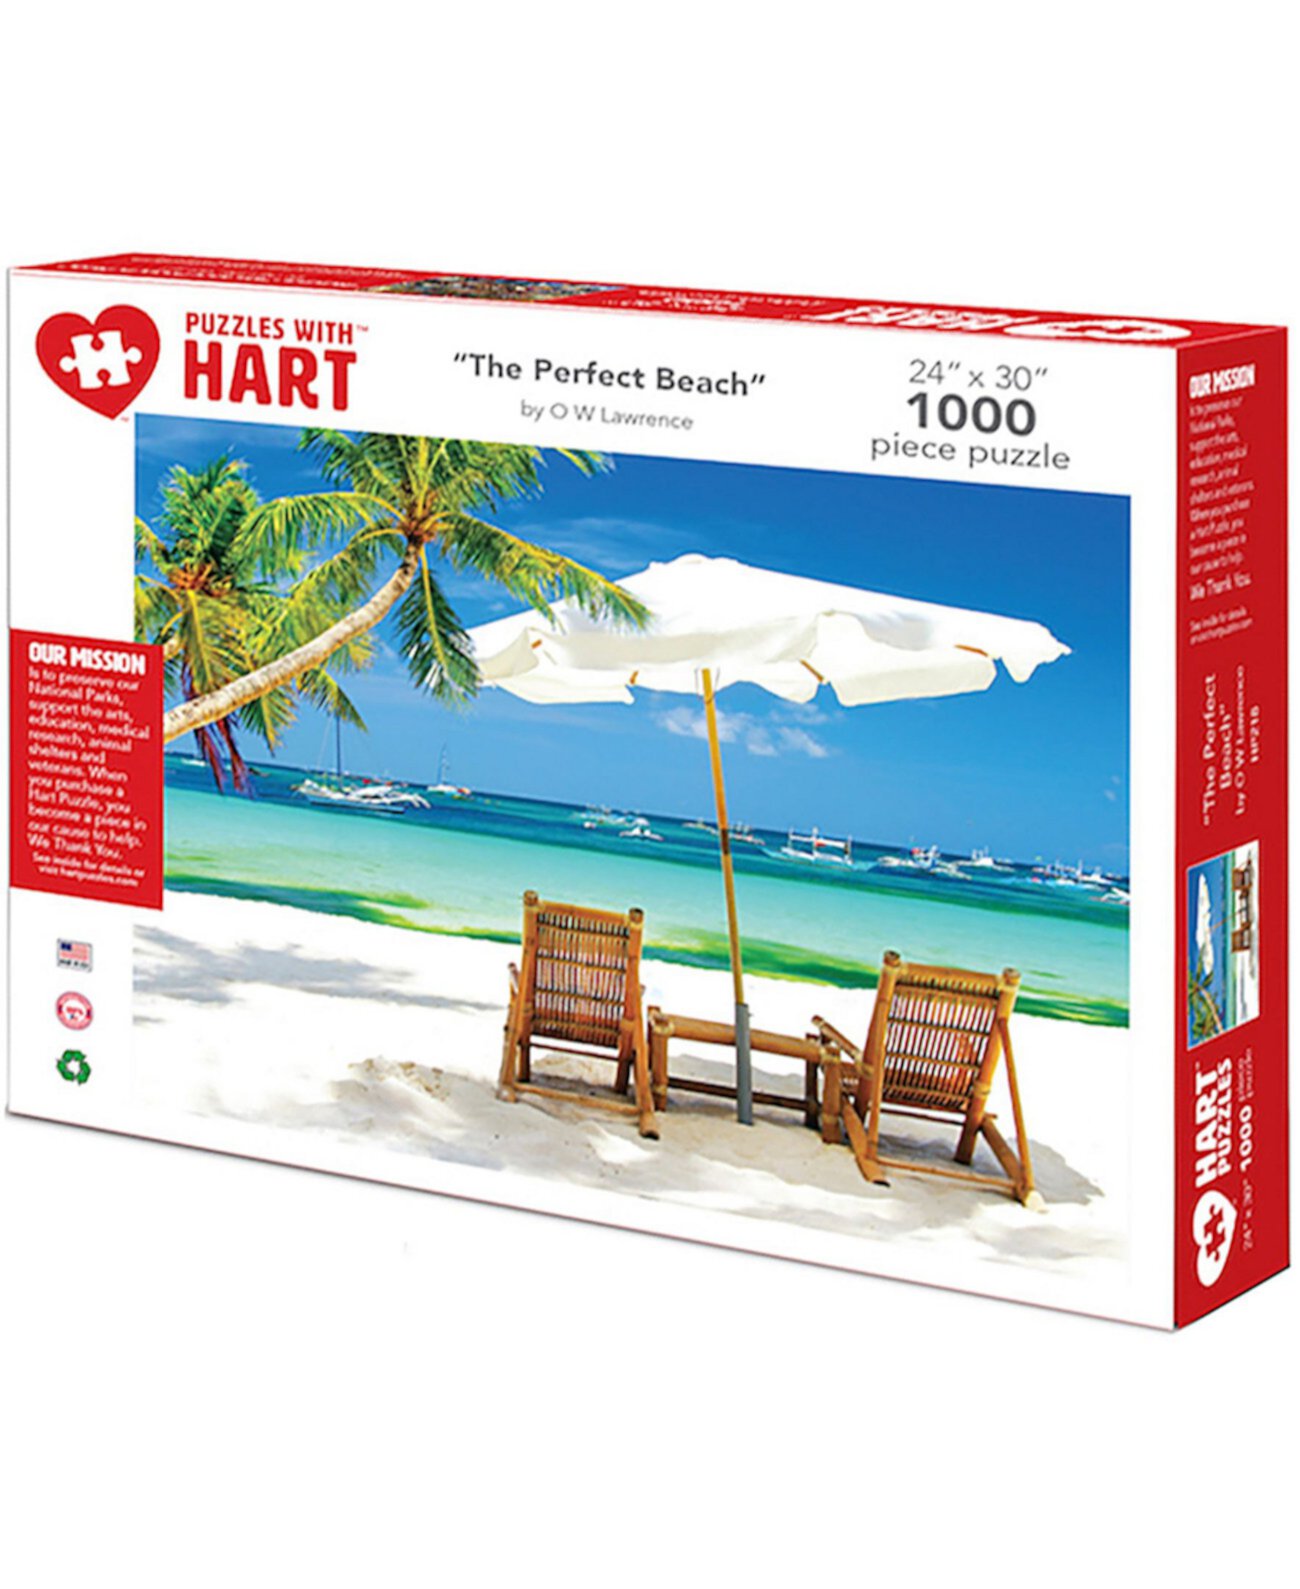 The Perfect Beach 24 x 30 дюймов, набор Оу Лоуренса, 1000 штук Hart Puzzles